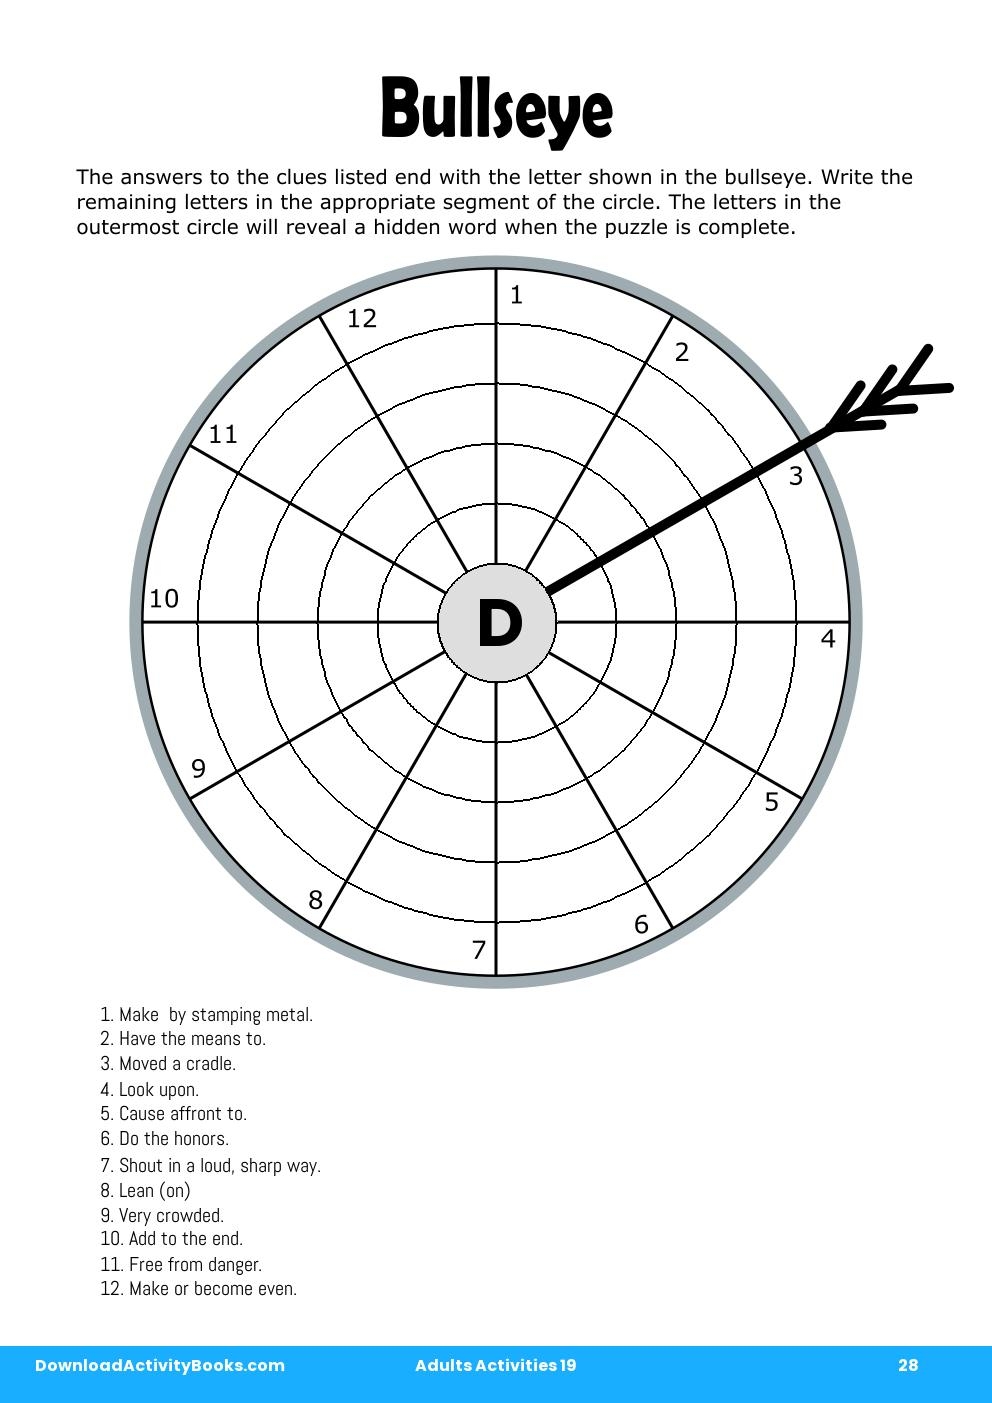 Bullseye in Adults Activities 19